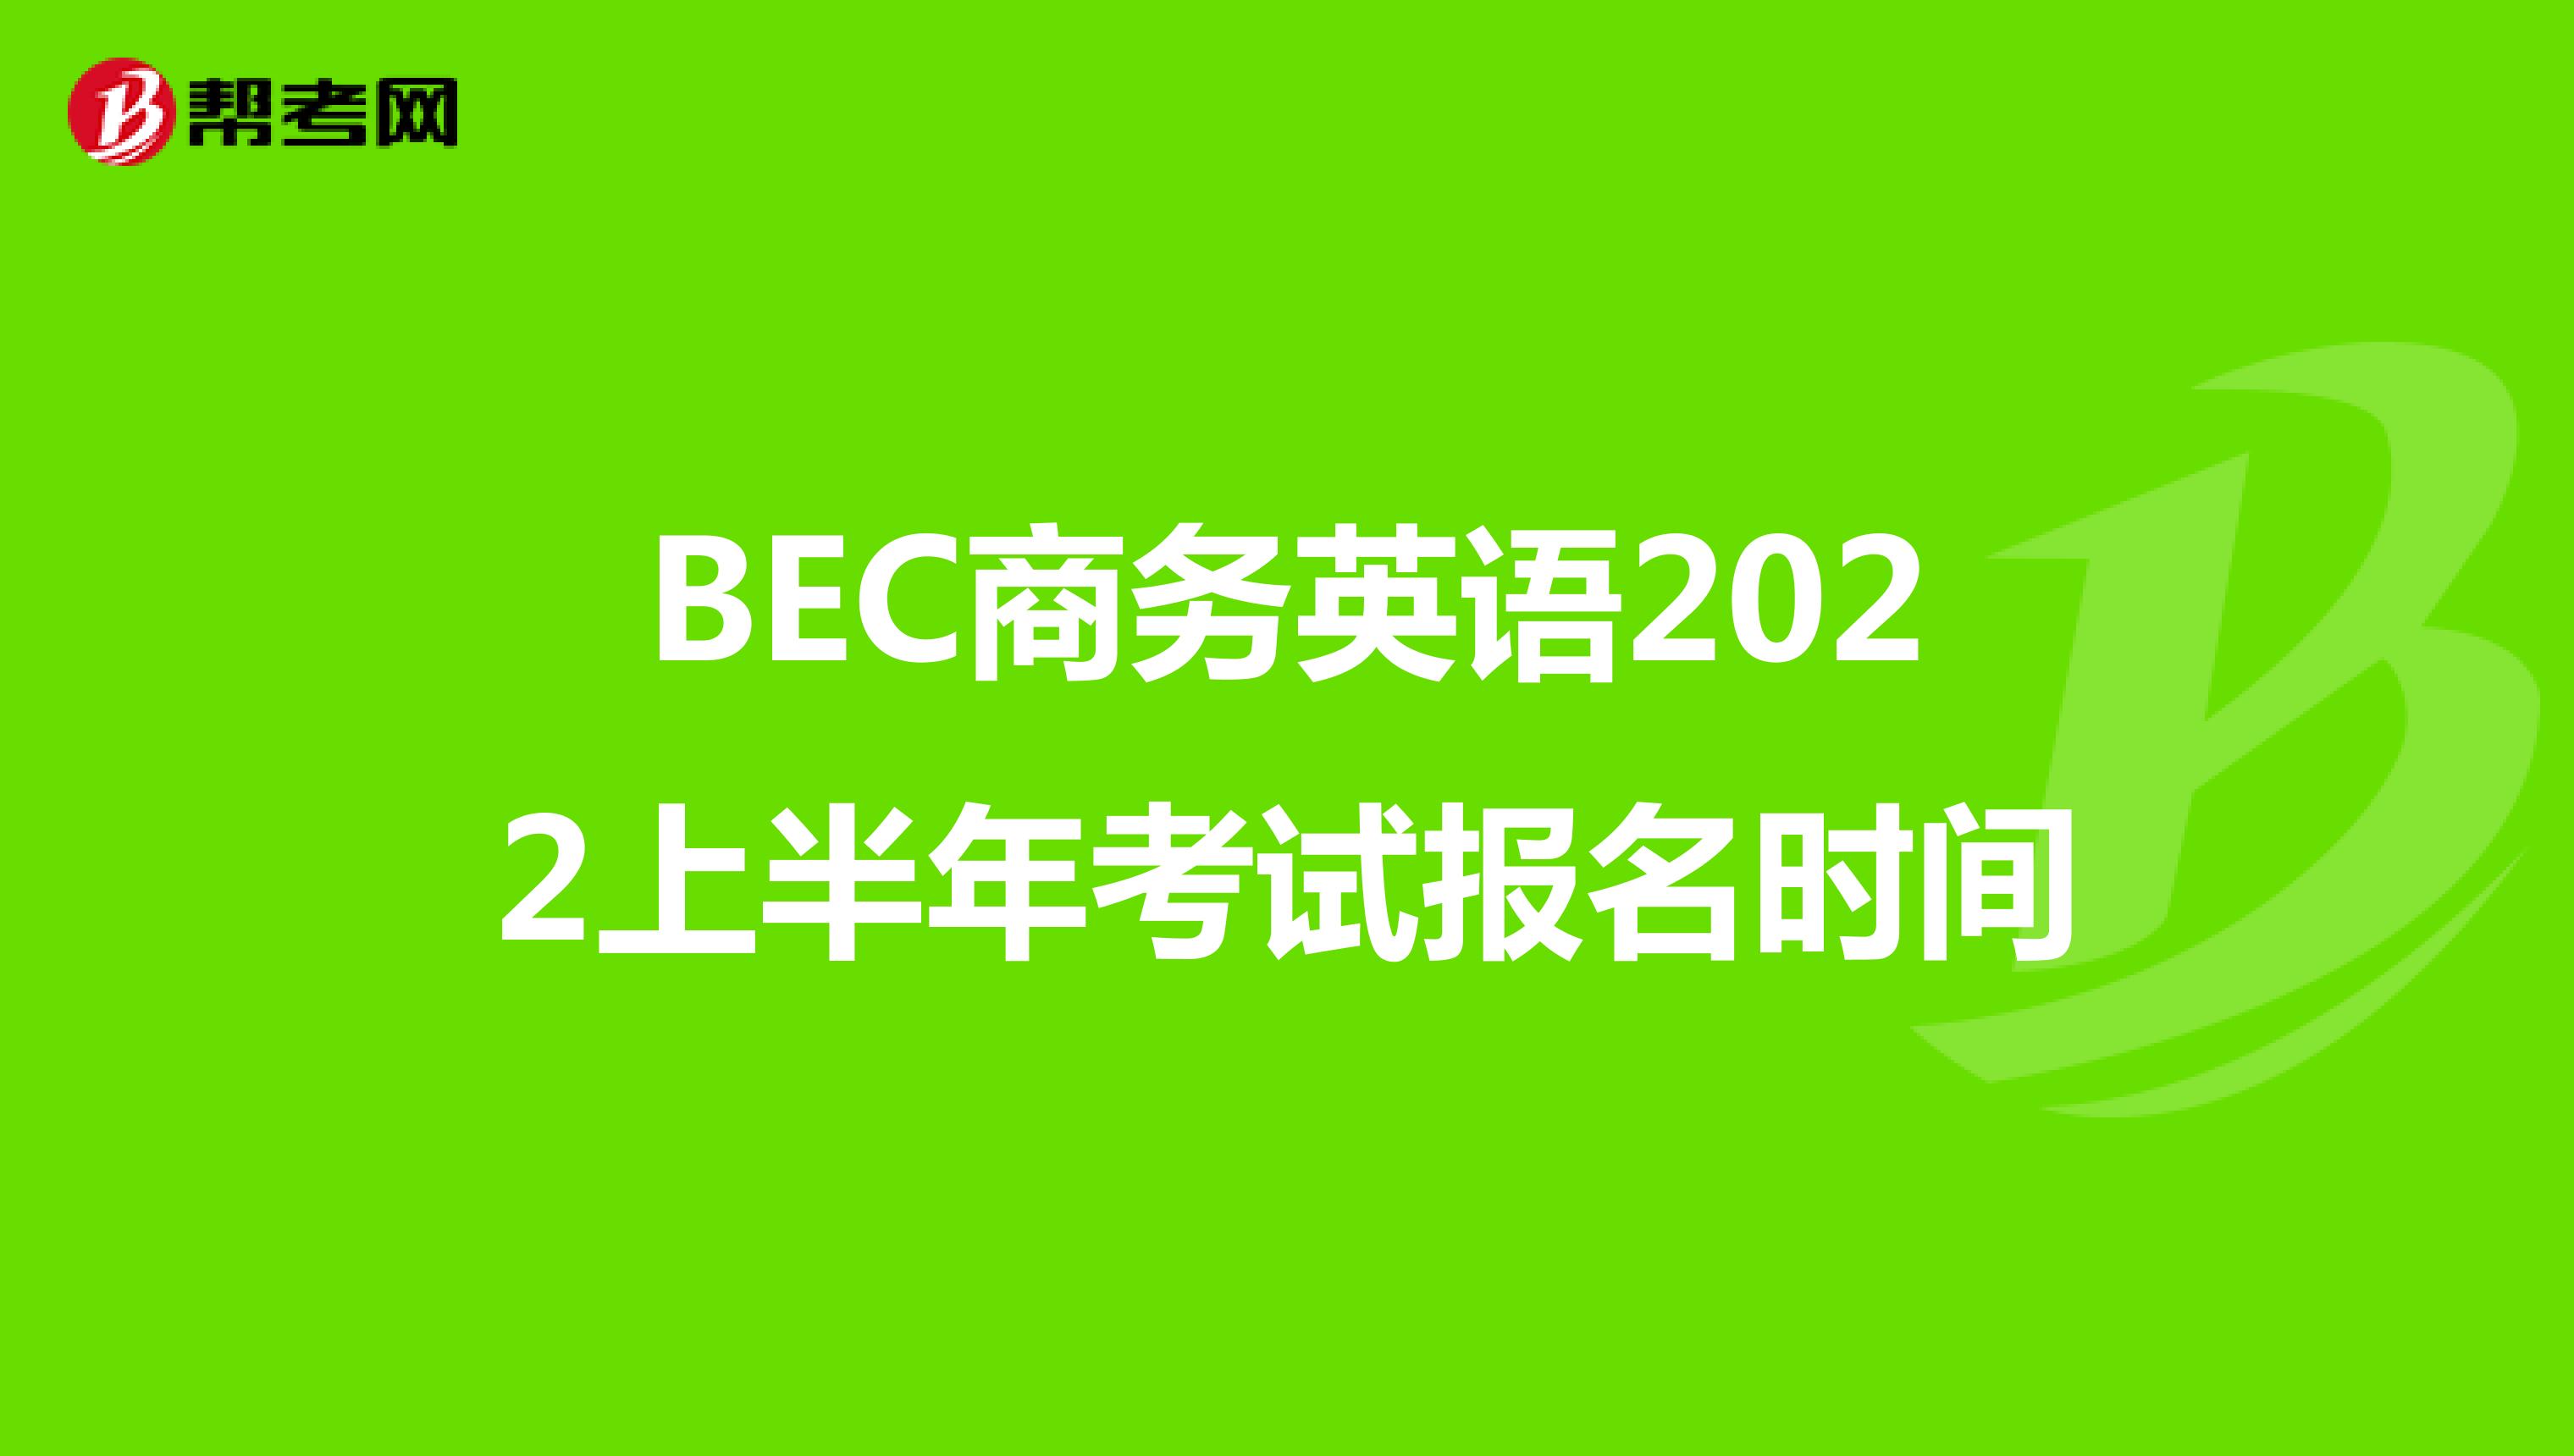 BEC商务英语2022上半年考试报名时间